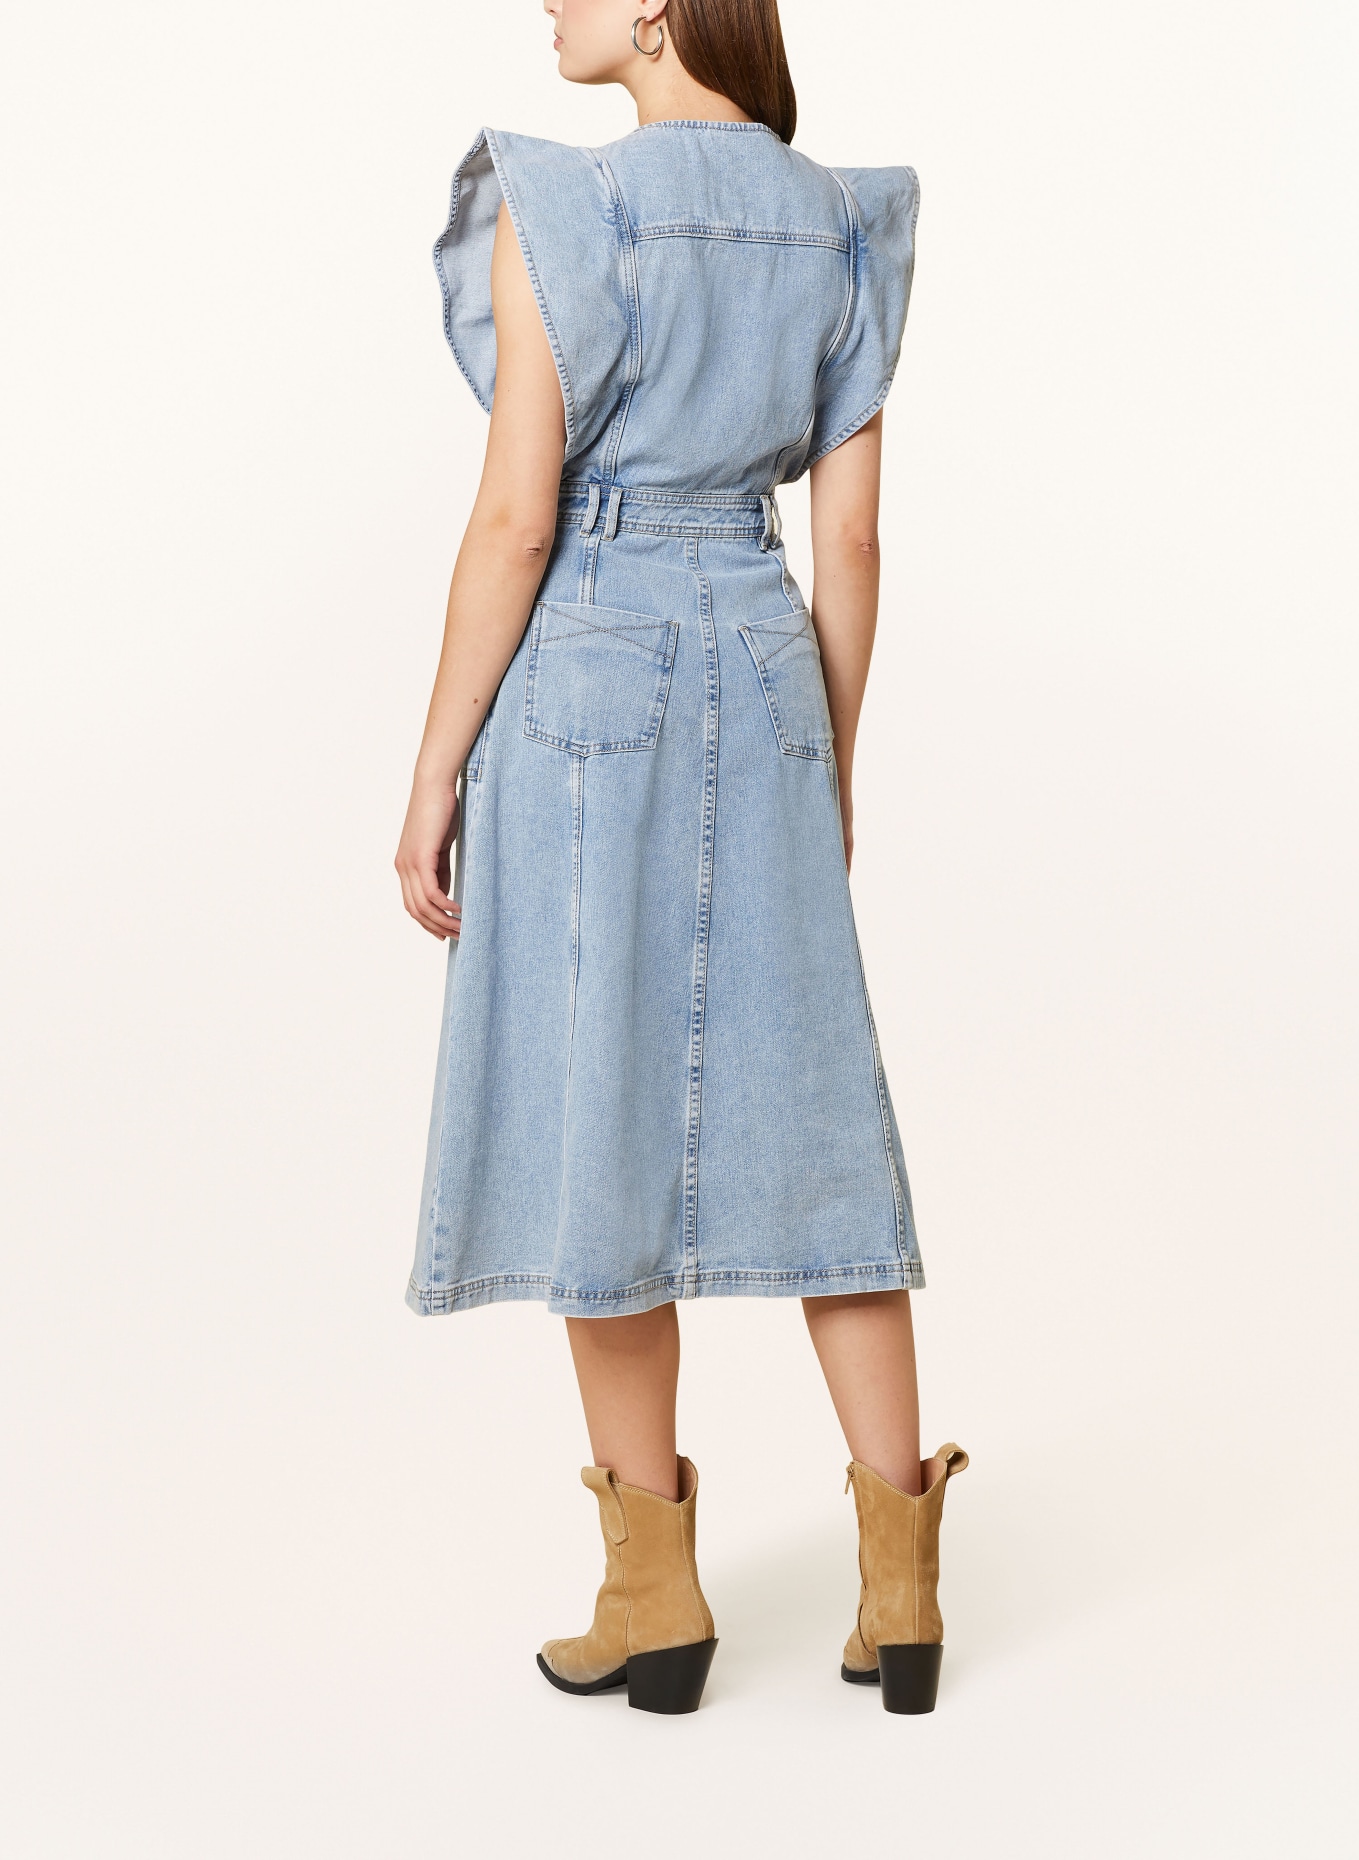 ROUGE VILA Jeanskleid mit Volants, Farbe: LIGHT BLUE DENIM (Bild 3)